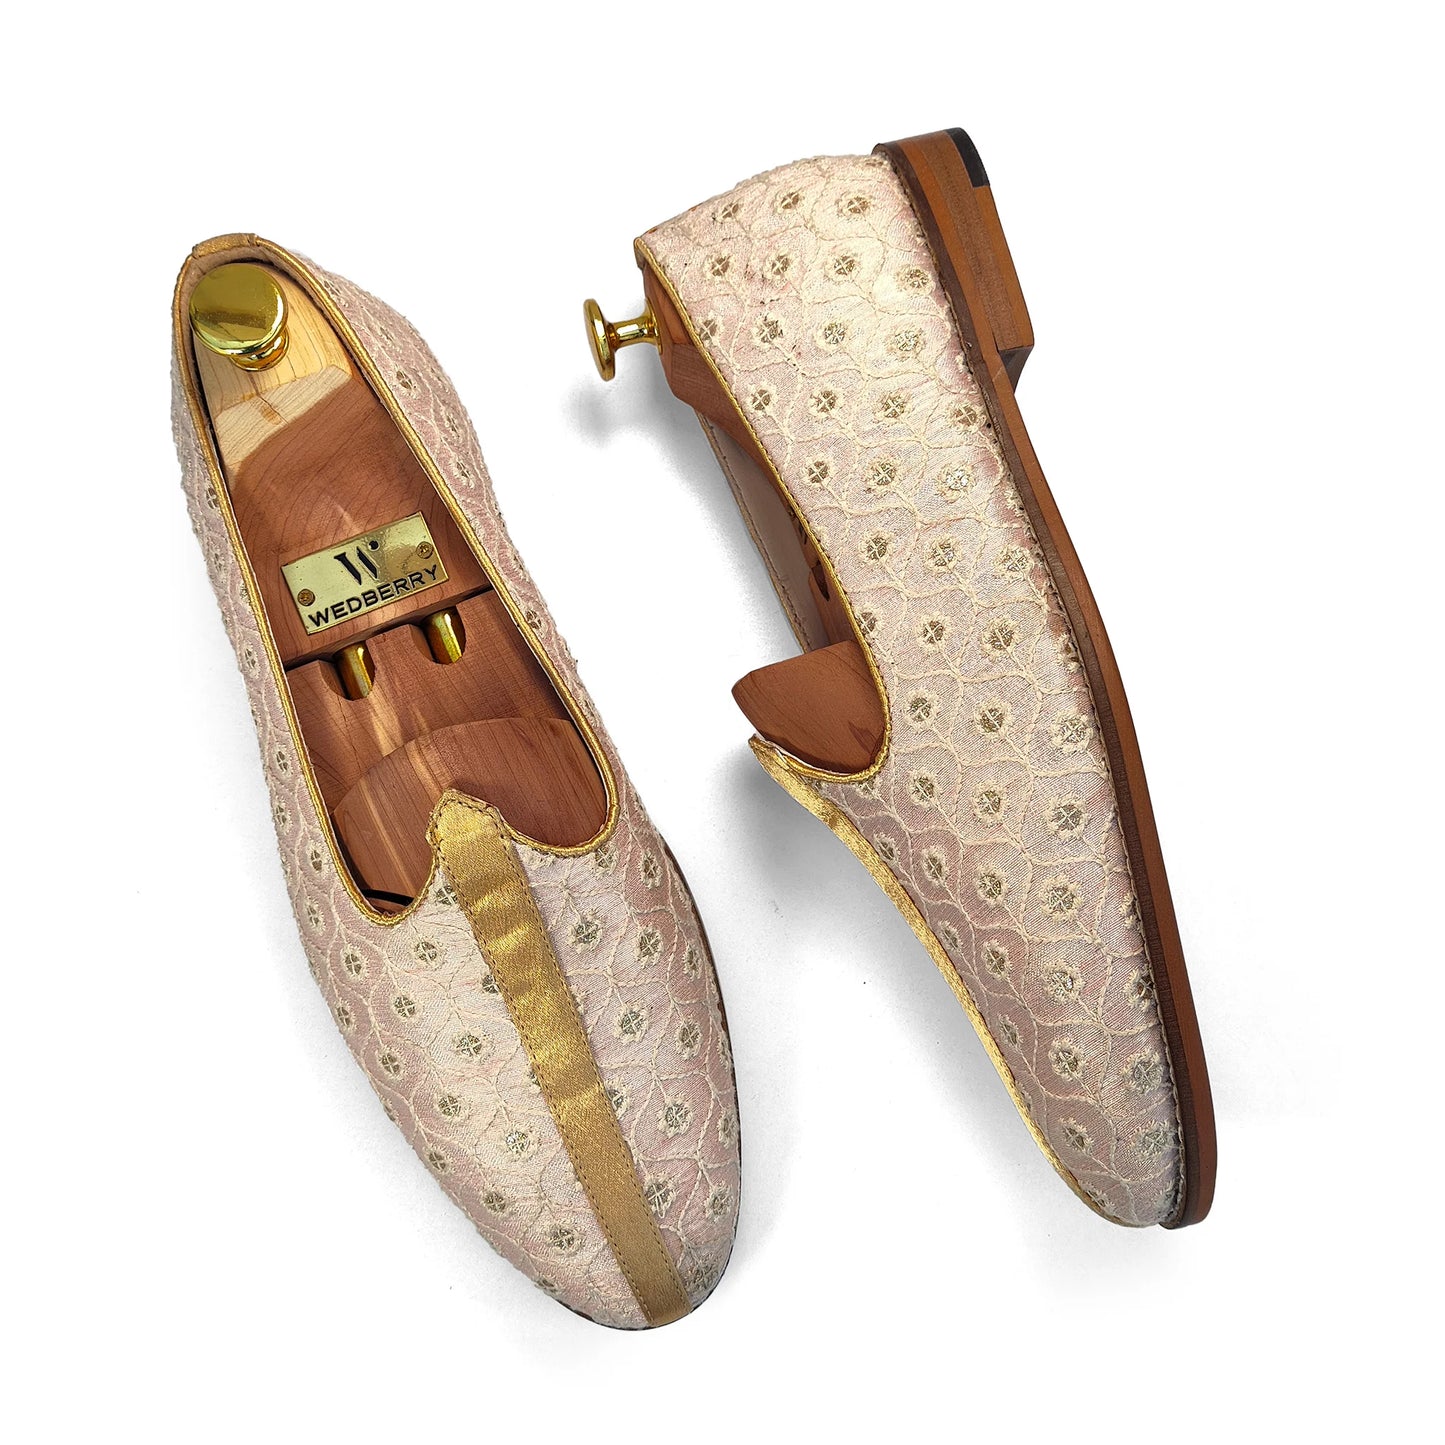 Light Pink Tara Work Wedding Shoes Ethnic Loafers for Men